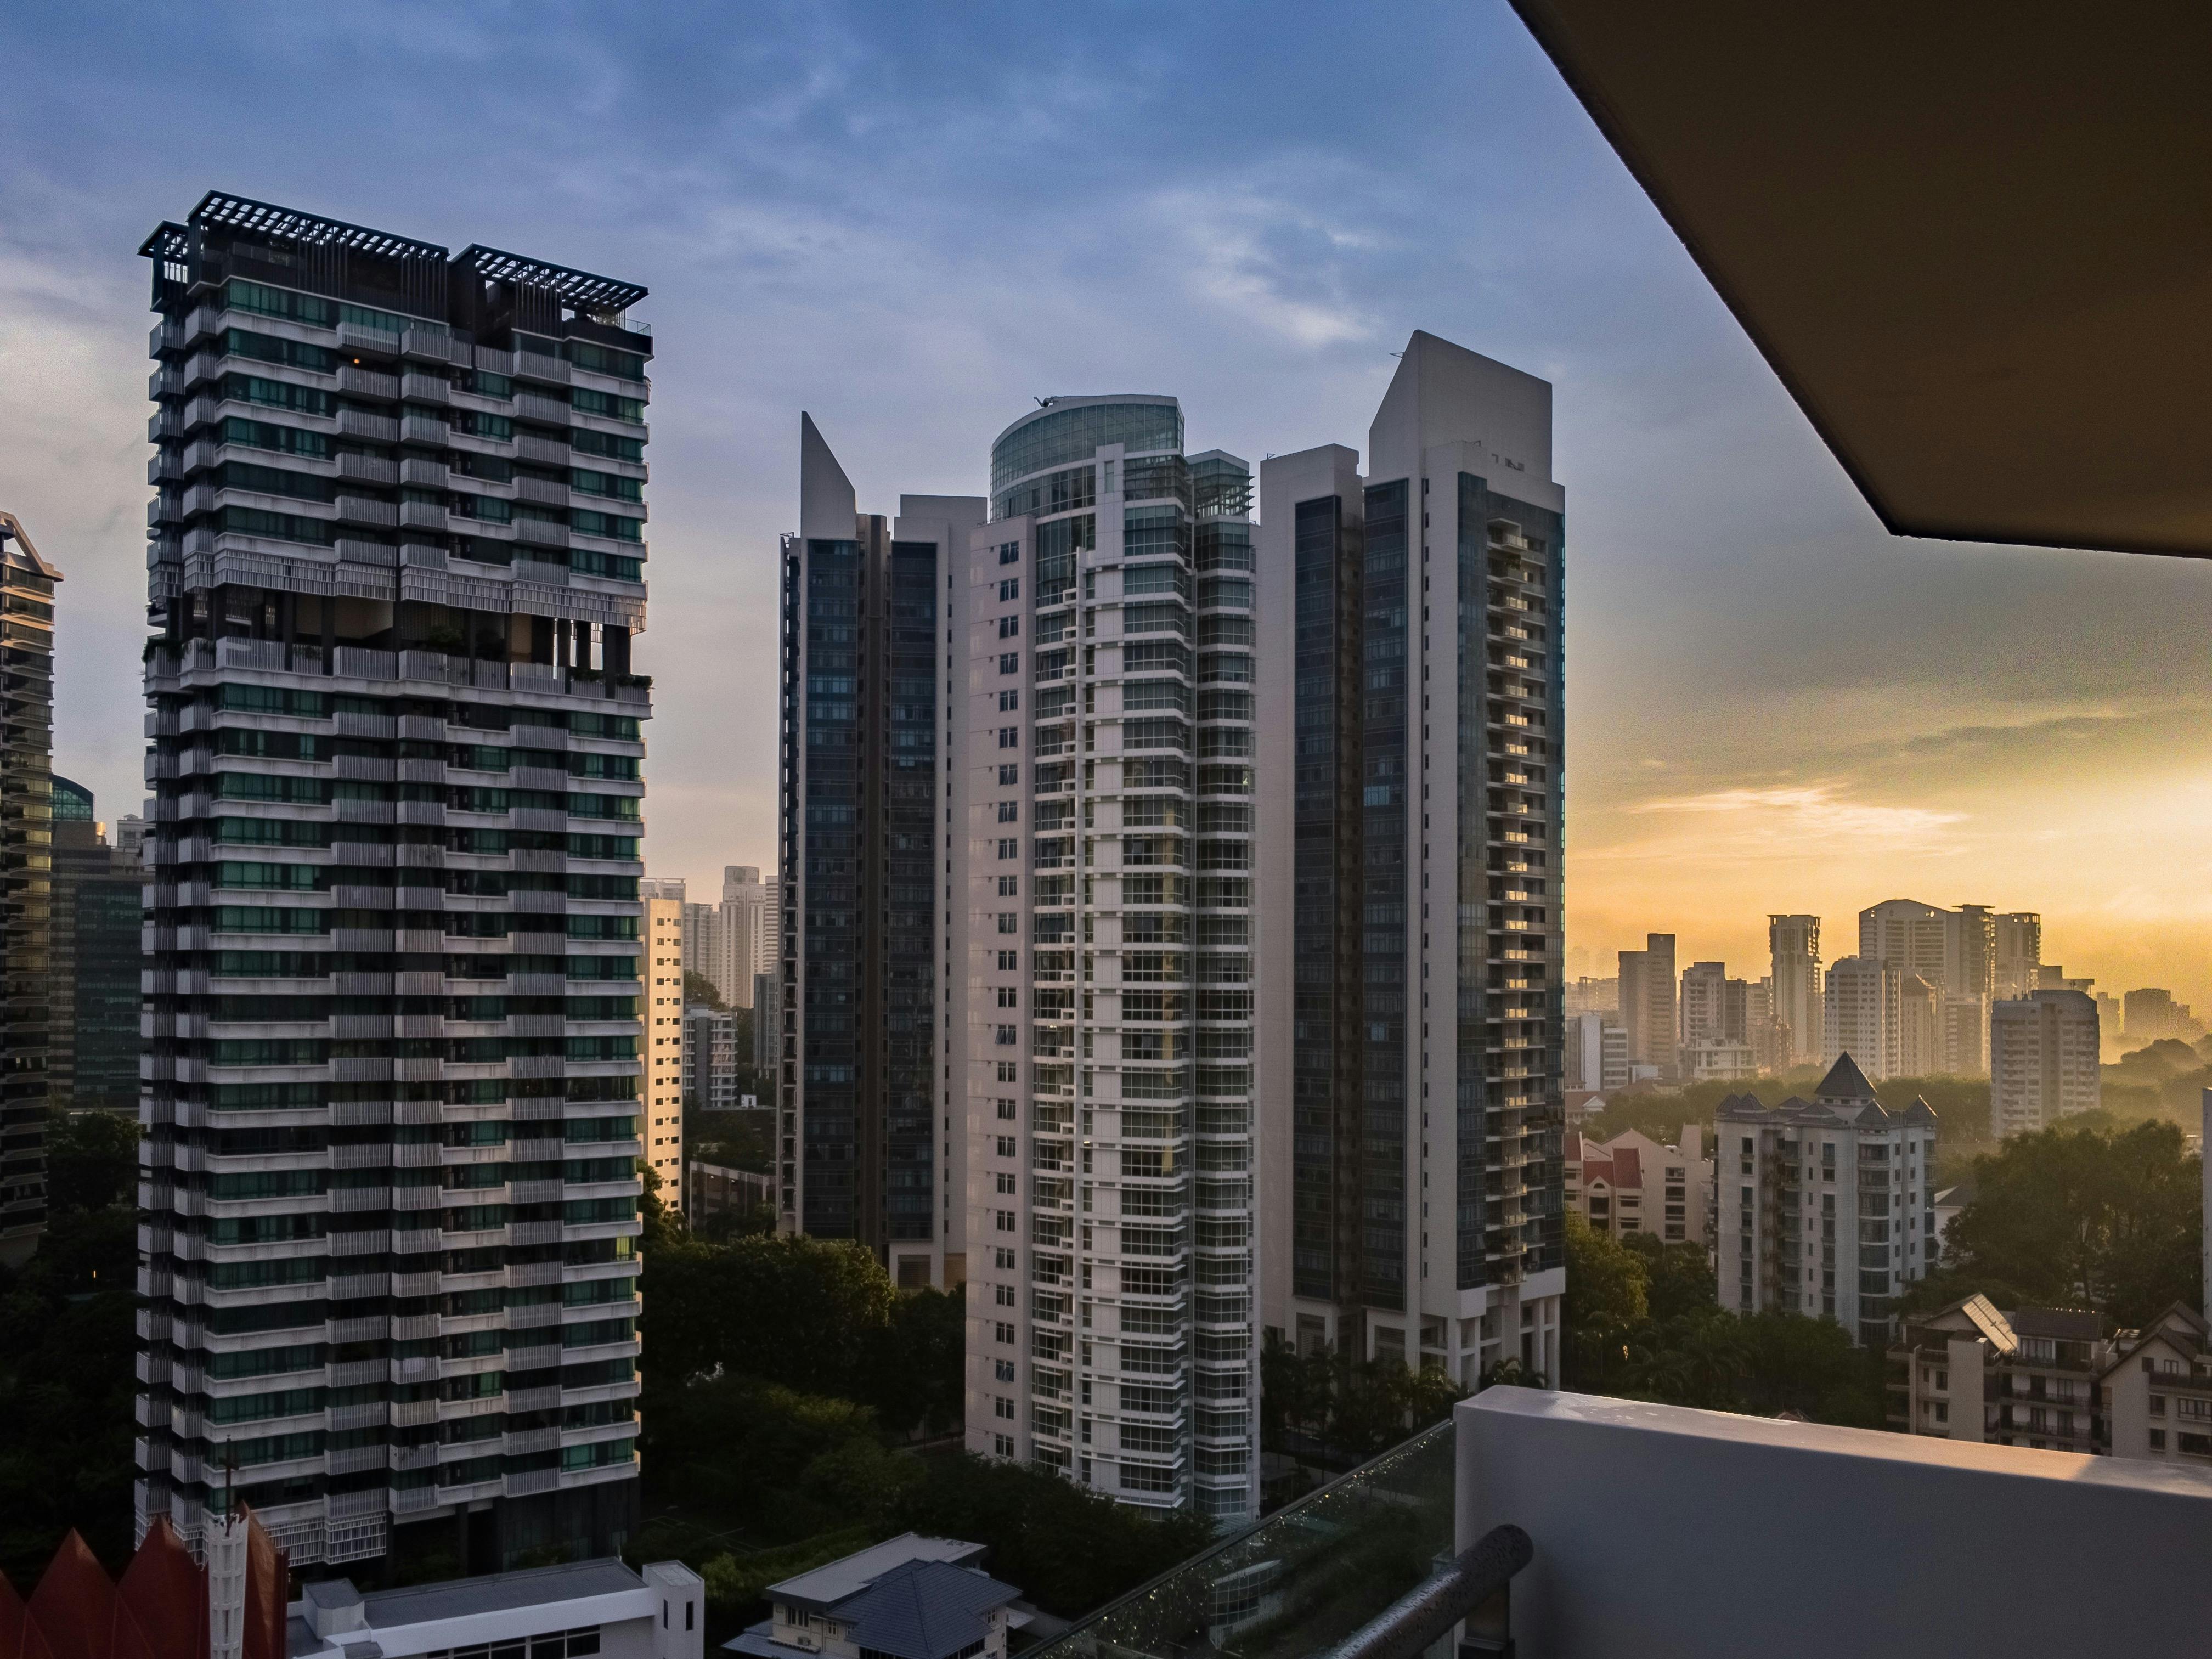 pexels-photo-825582.jpeg?cs=srgb&dl=1-surrey-road-view-high-rise-apartment-singapore-sunset-825582.jpg&fm=jpg